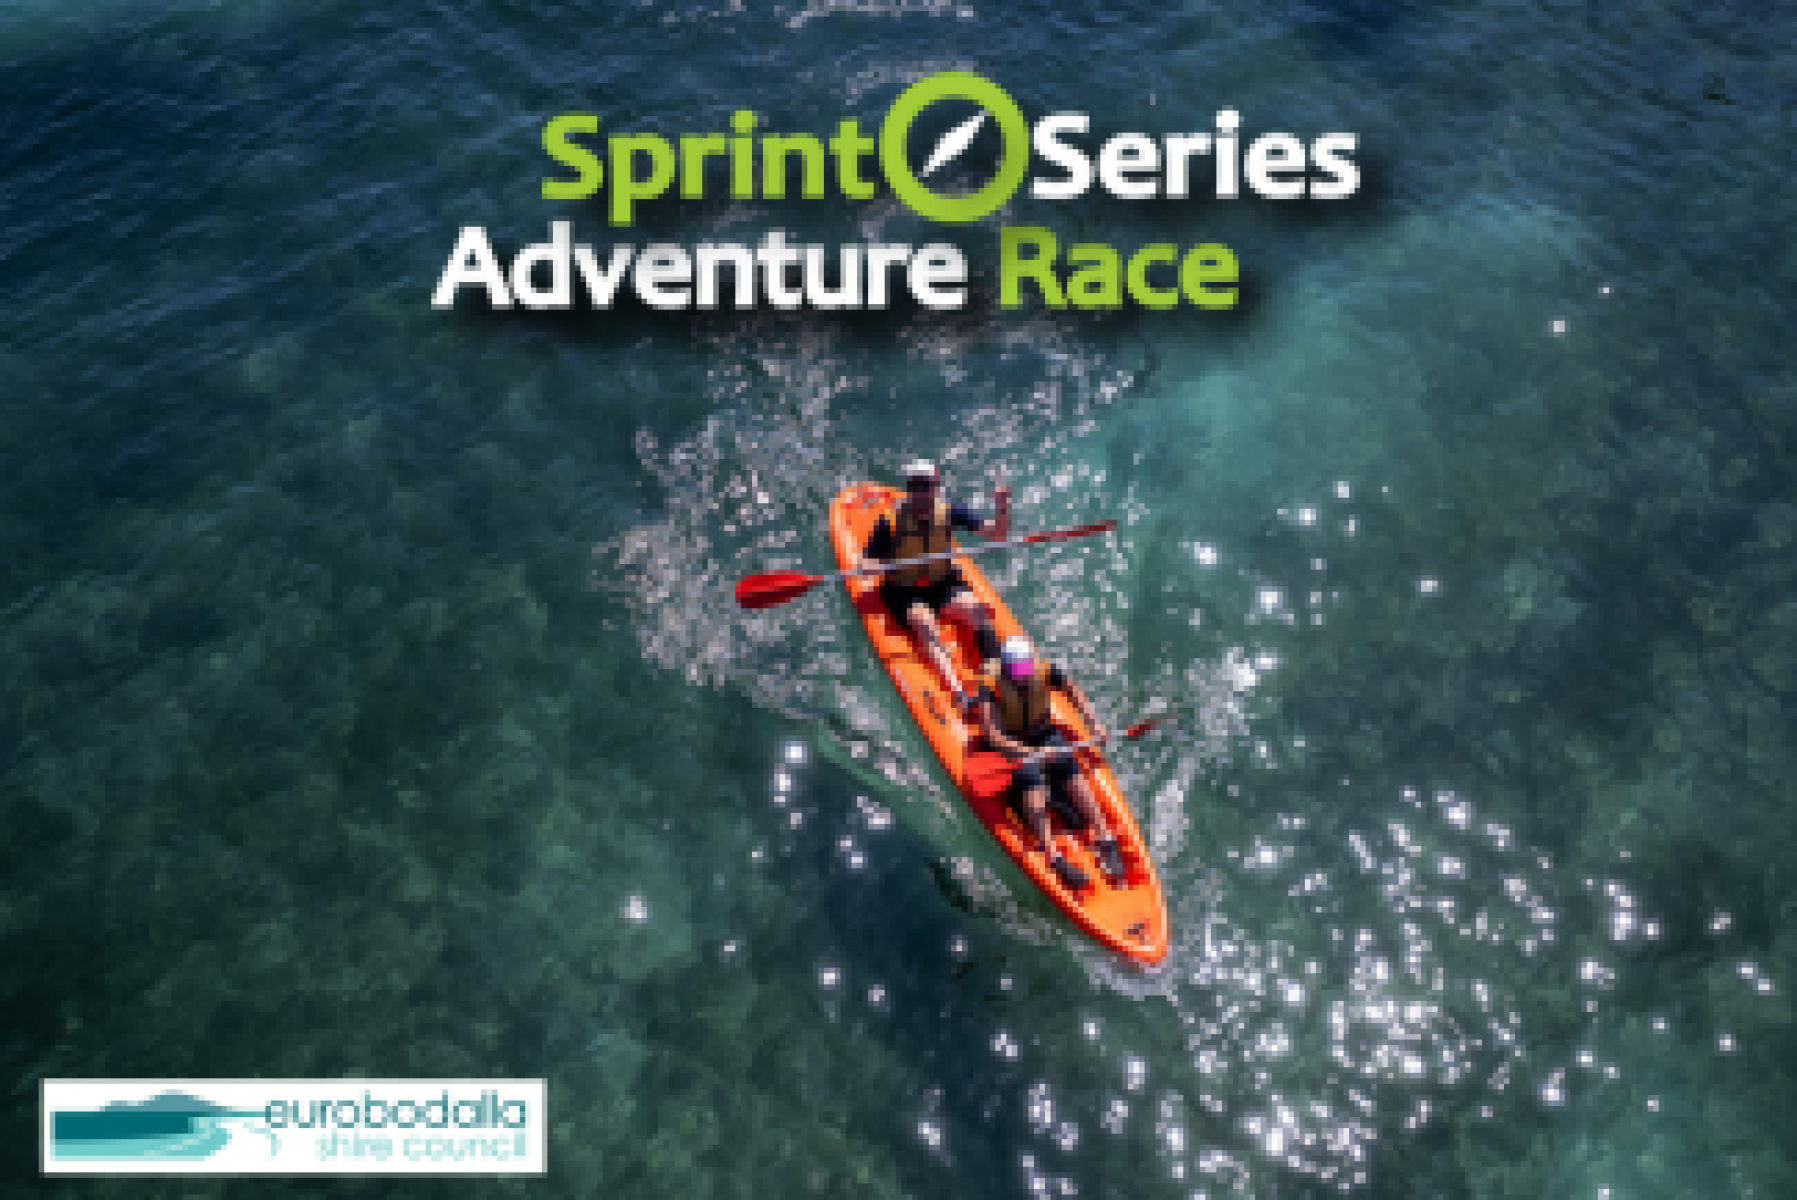 Sprint Series Adventure Race